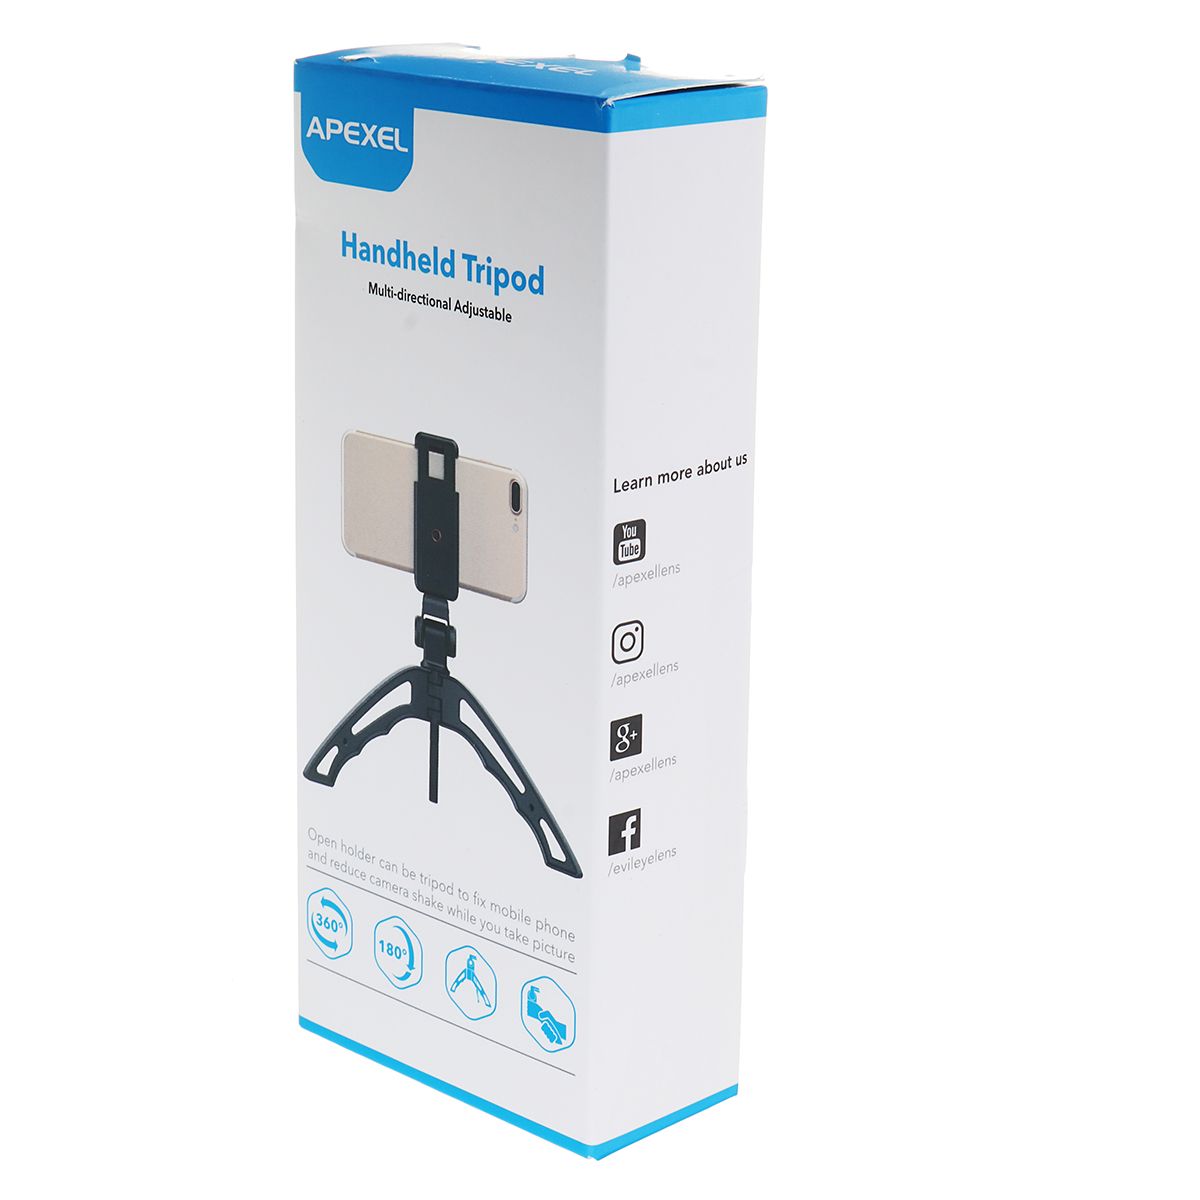 APEXEL-APL-TRI-Mini-Desktop-Multi-directional-Adjustable-Handheld-Tripod-with-Clip-for-Smartphones-1301018